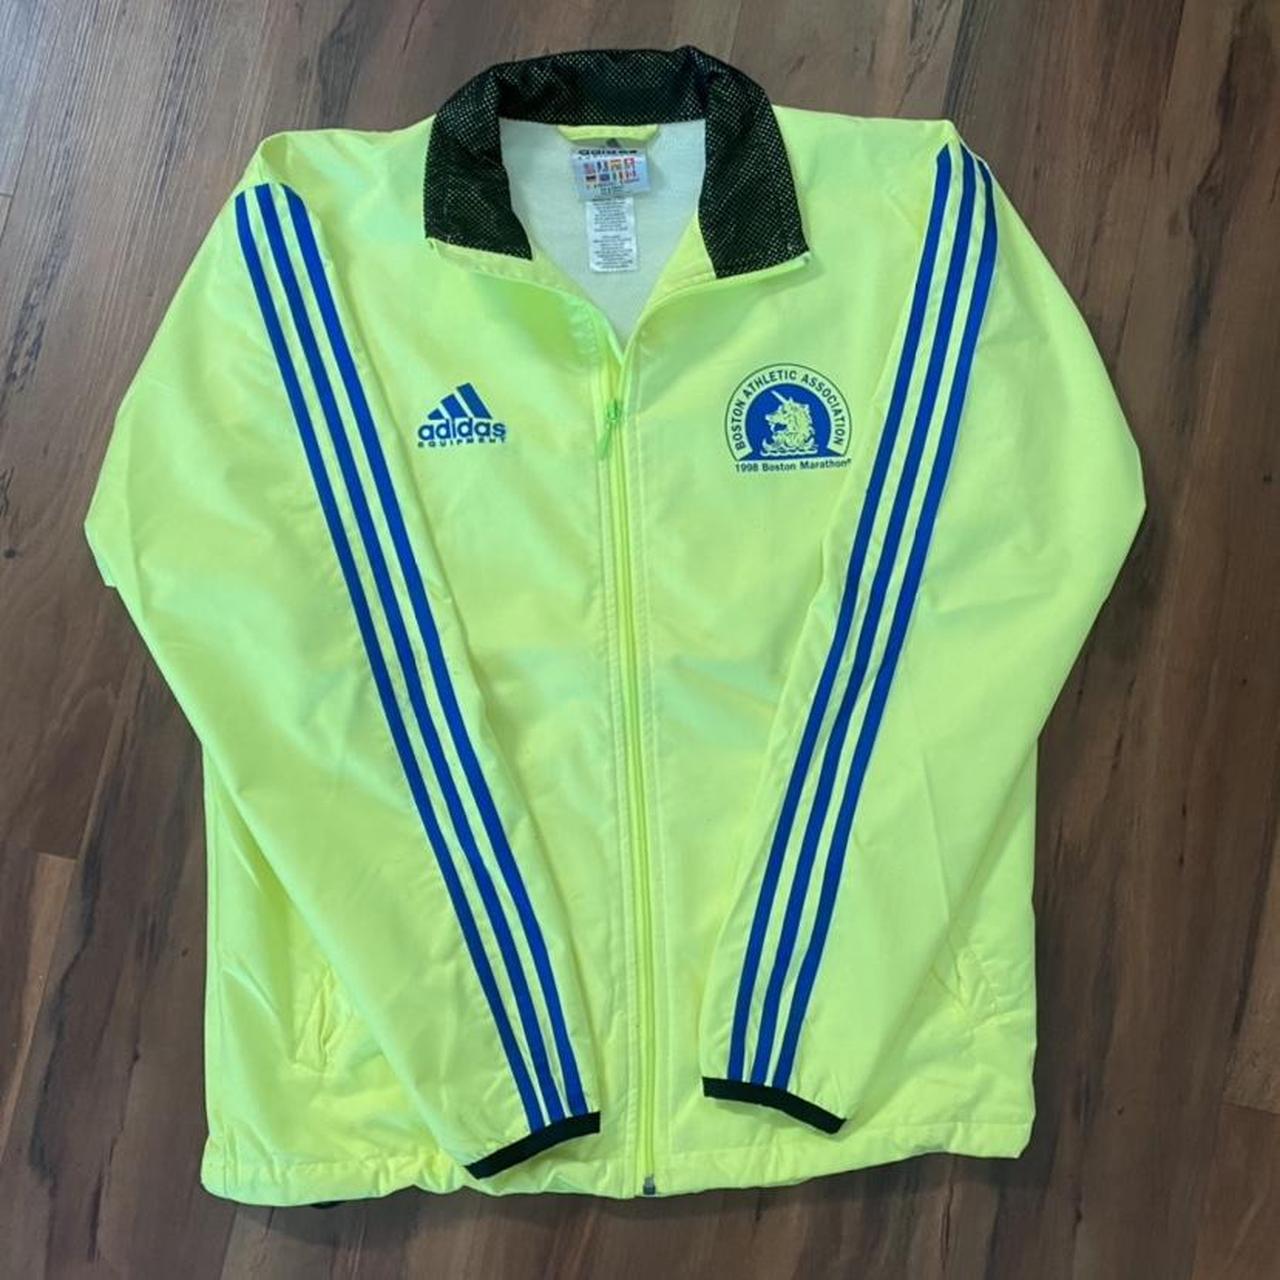 Vintage Thrift Adidas 1994 Boston Marathon Windbreaker